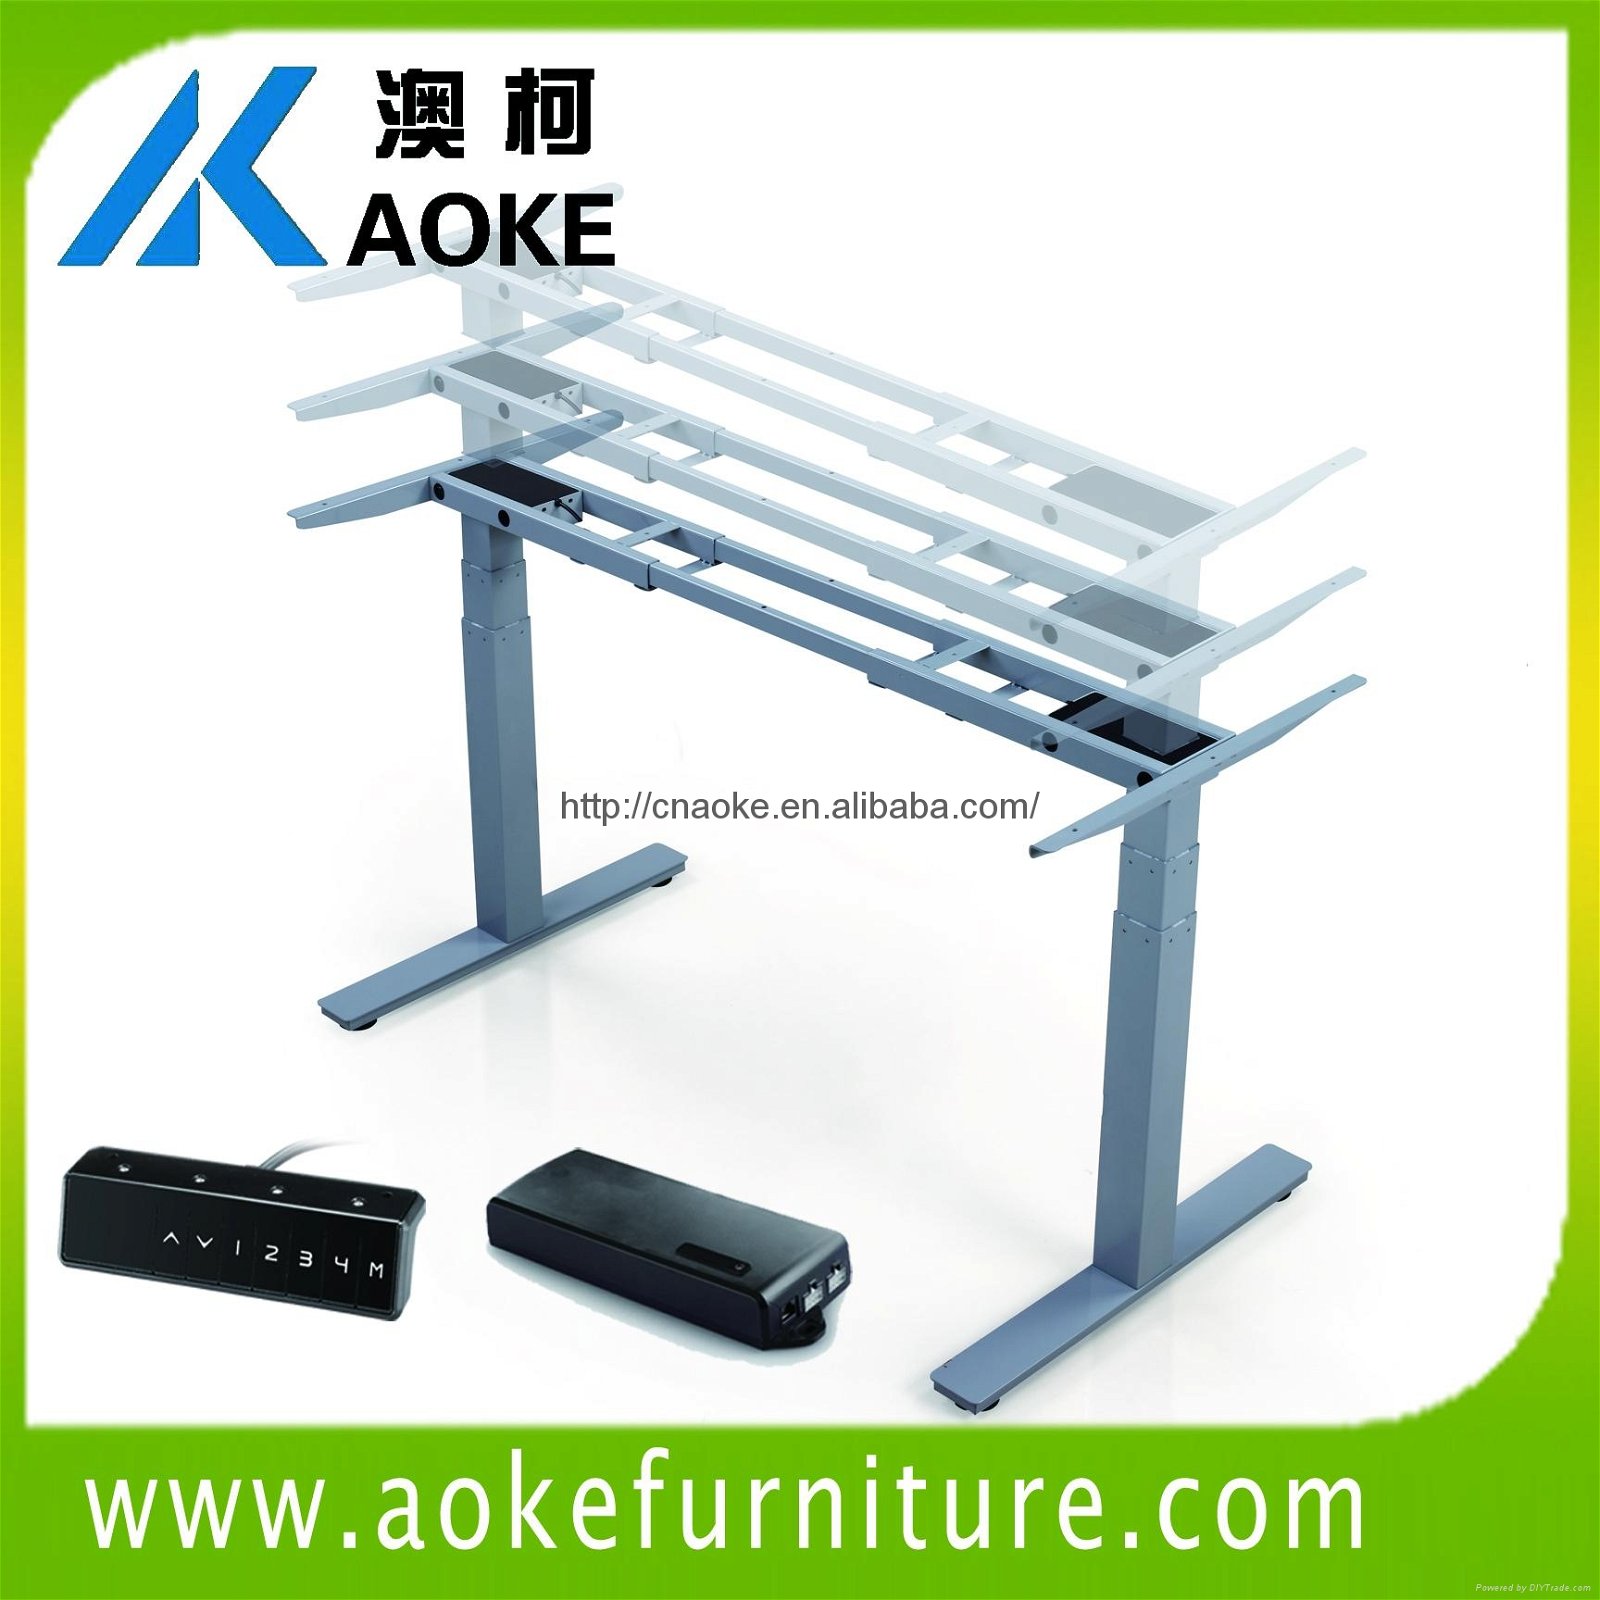 AOKE AK2RT-ZF2 adjustable height table 5